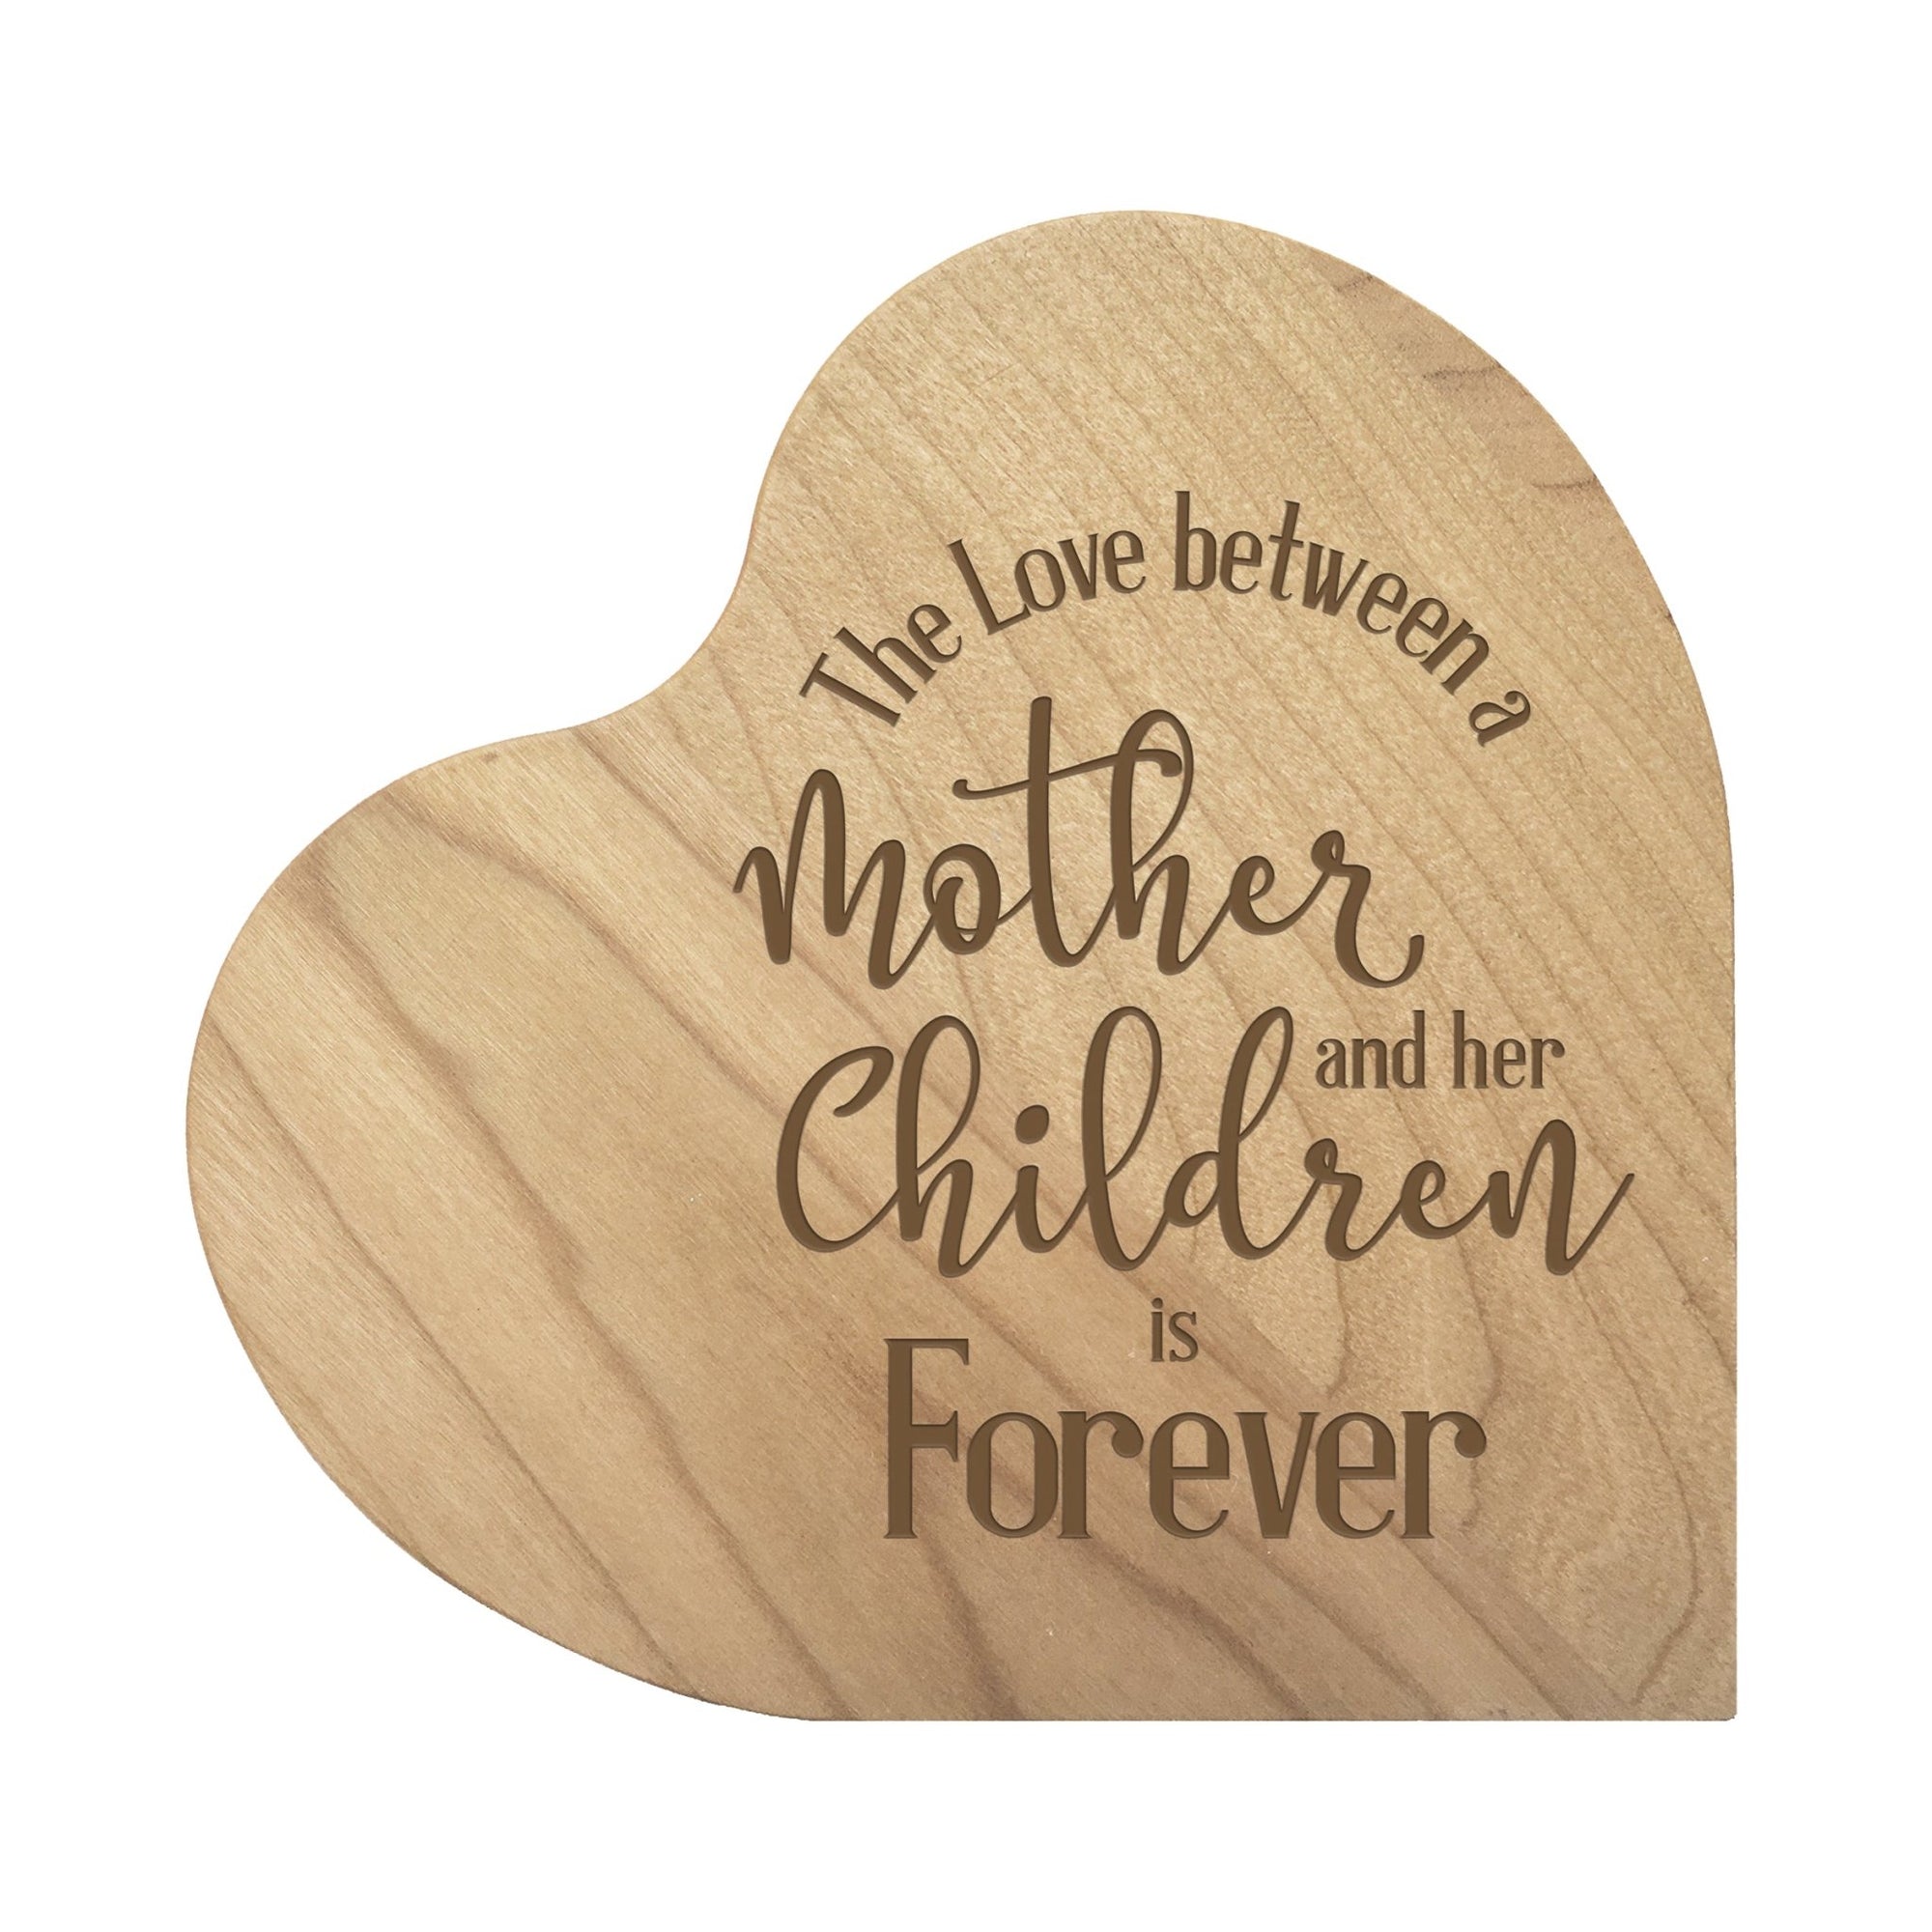 Engraved Wooden Heart Block 5” x 5.25” x 0.75”- The Love Between - LifeSong Milestones